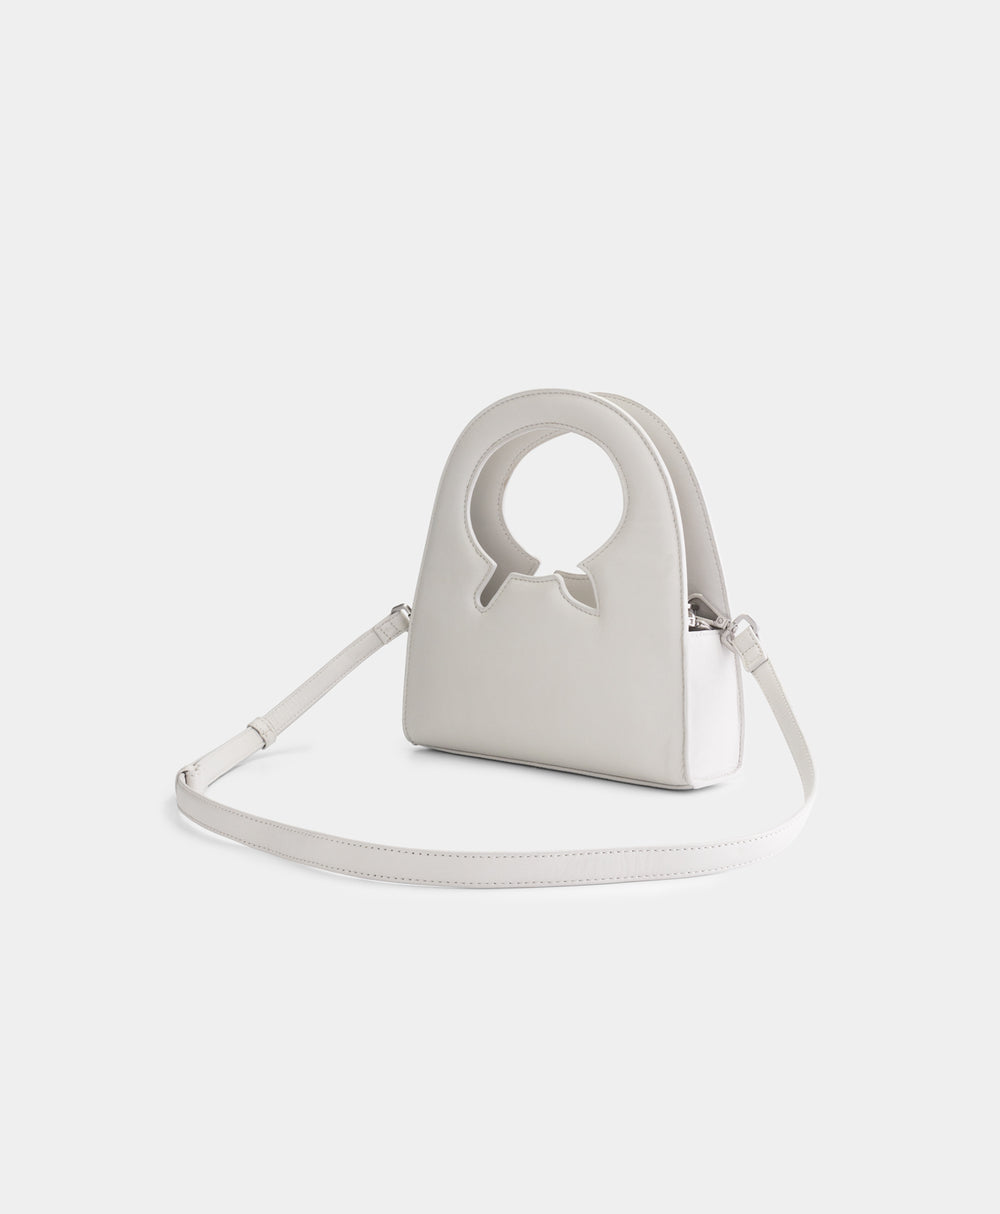 DP - Moonstruck Grey Codu Small Bag - Packshot - Rear